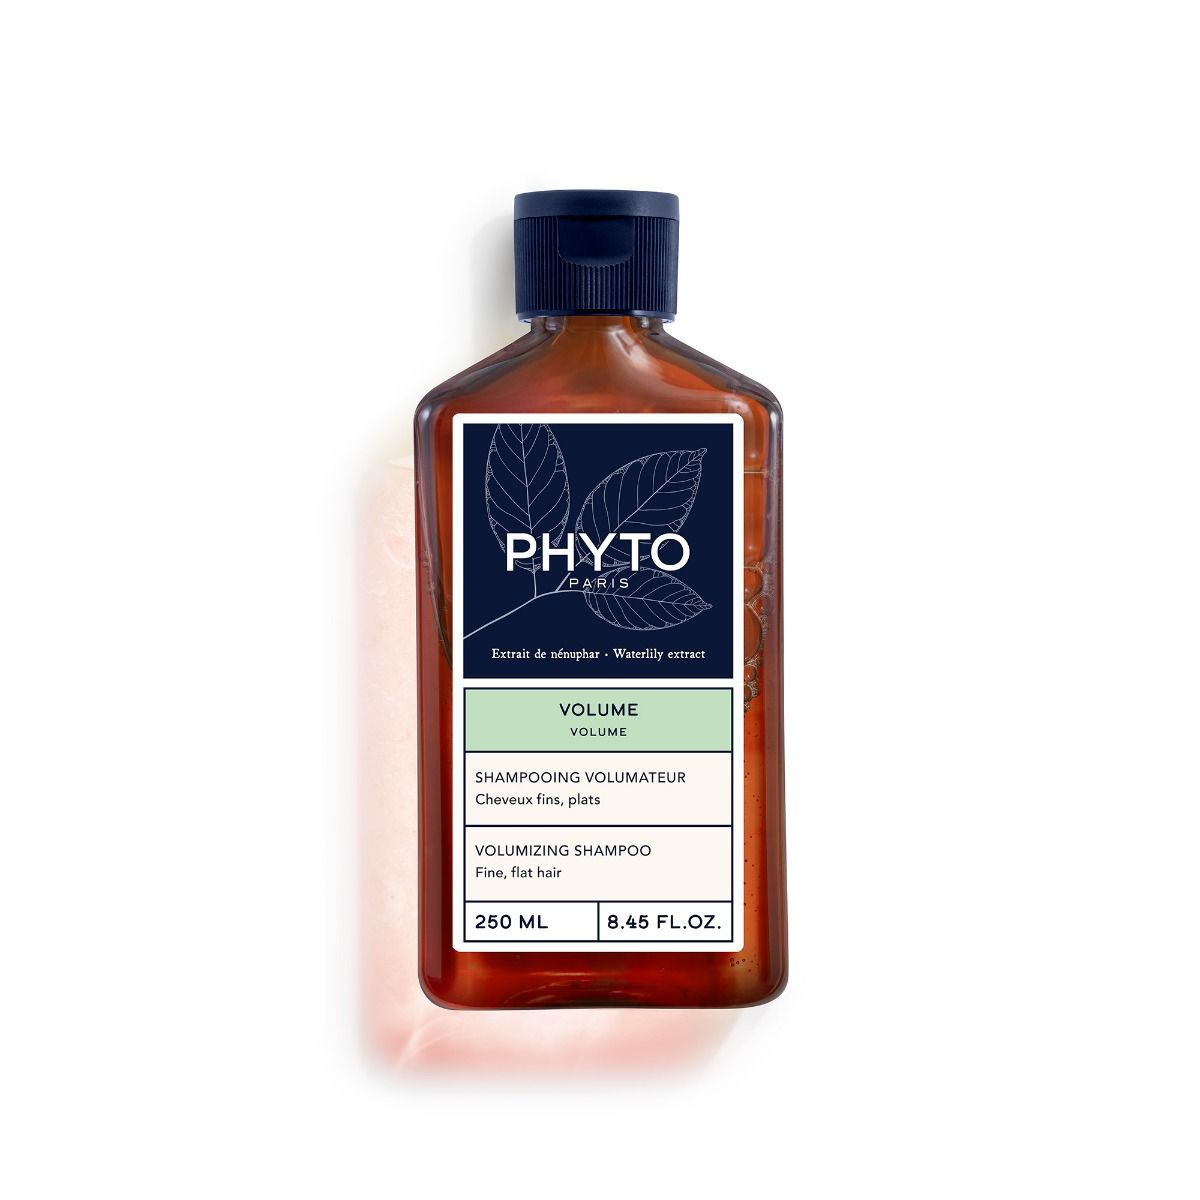 Phyto Phytovolume Shampooing nov 豐盈彈性洗髮露 適合幼細、扁塌髮質